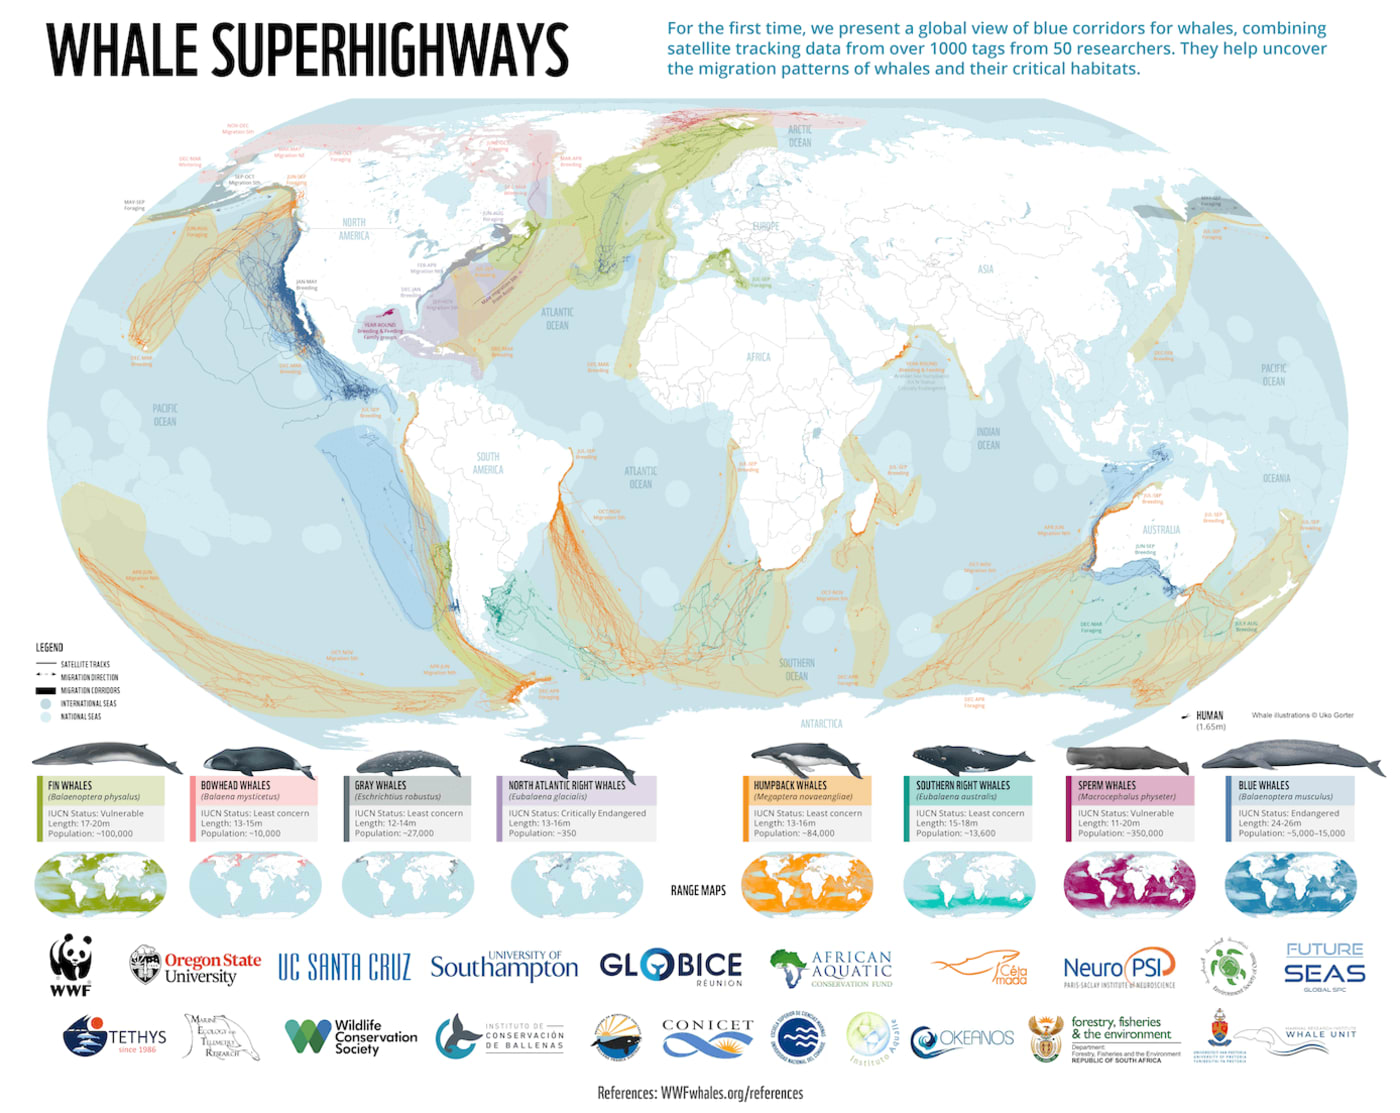 Whale superhighways